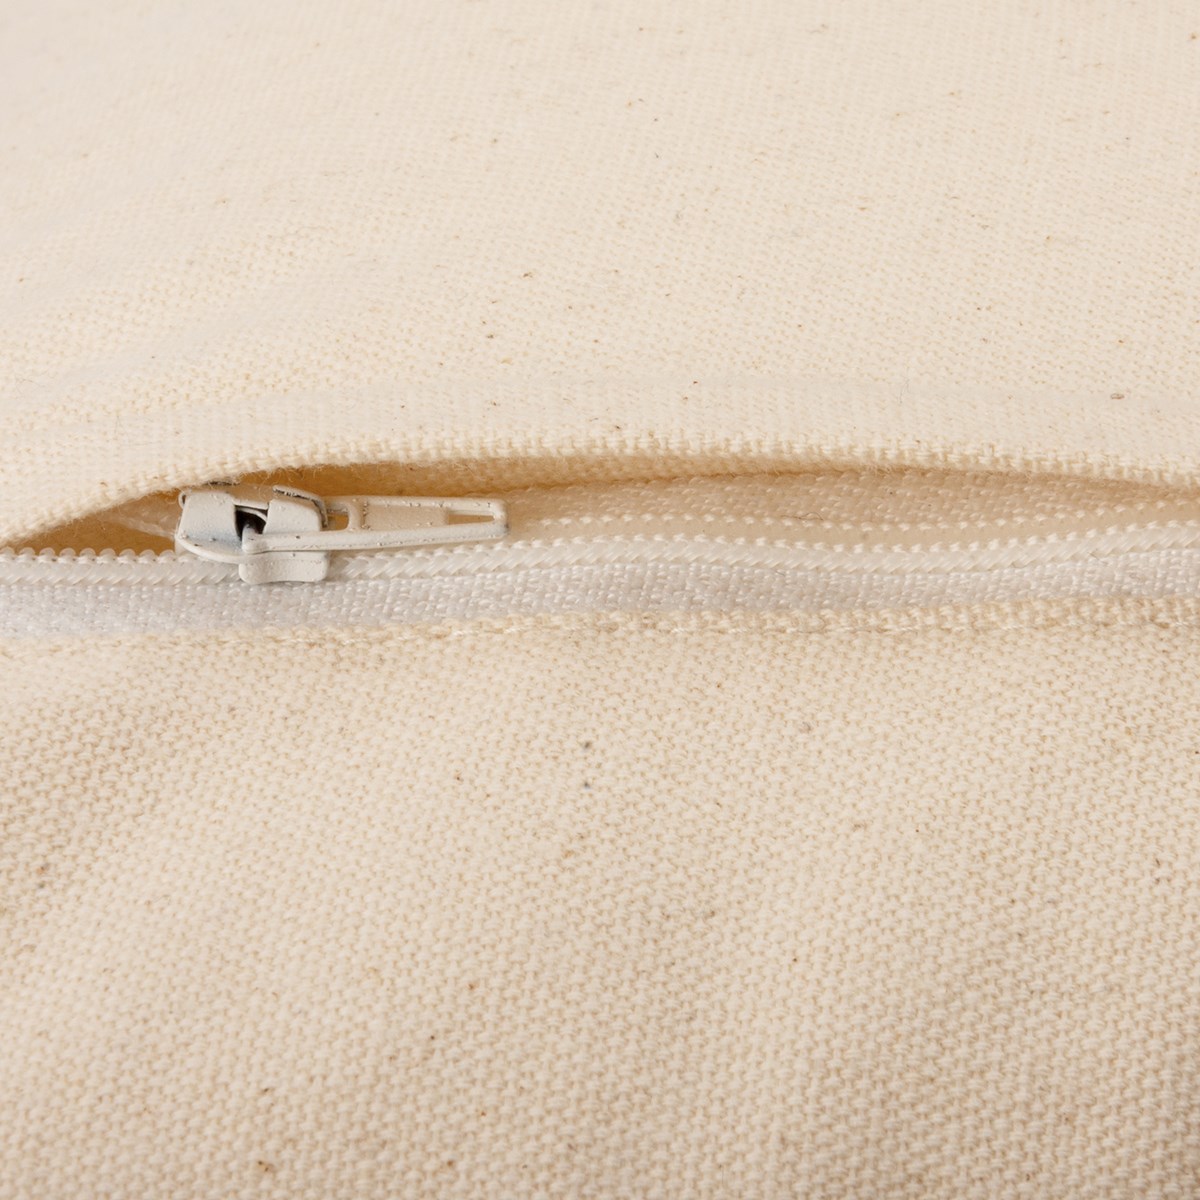 Black Grid Pillow - Cotton, Zipper